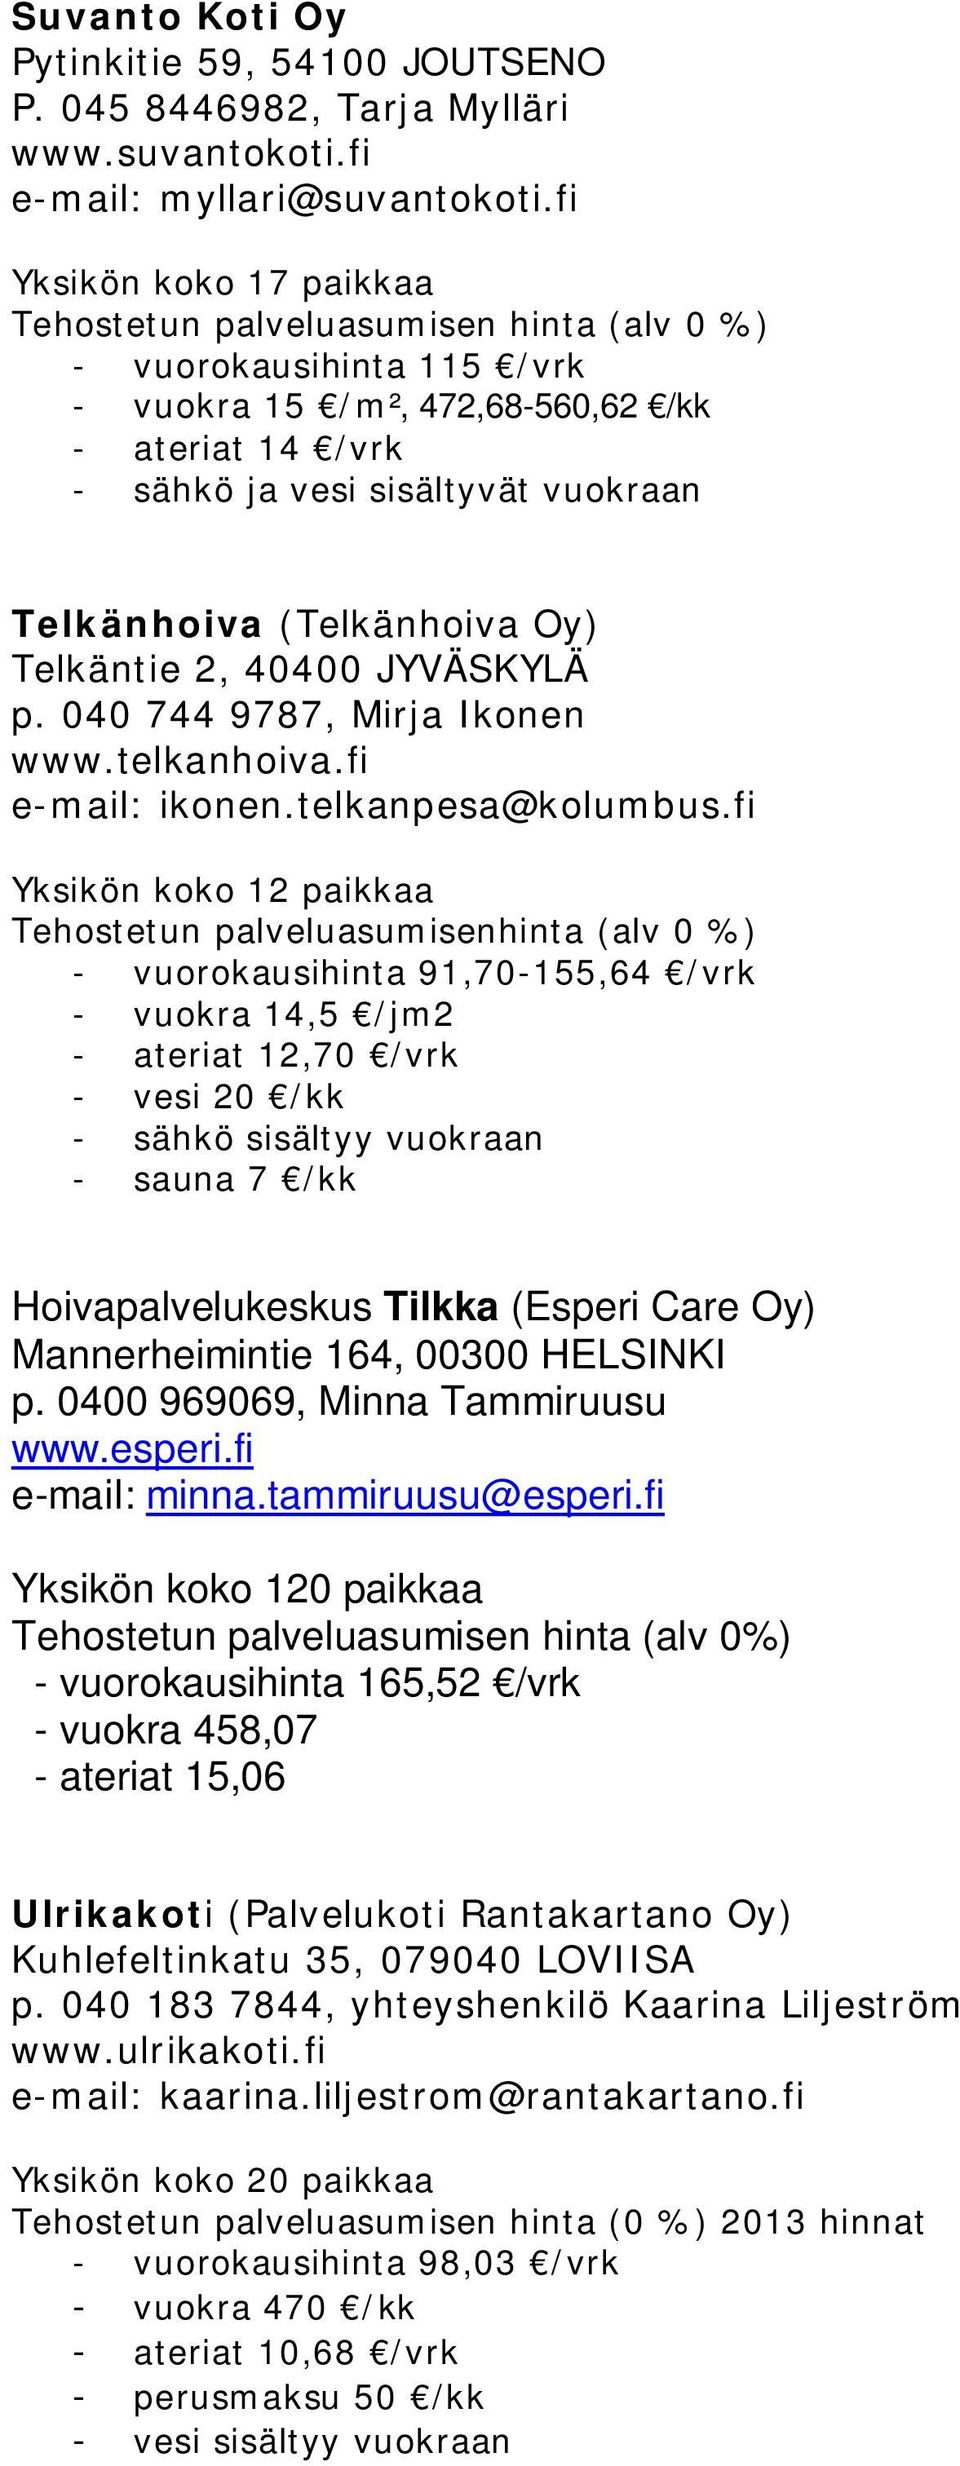 telkanhoiva.fi e-mail: ikonen.telkanpesa@kolumbus.